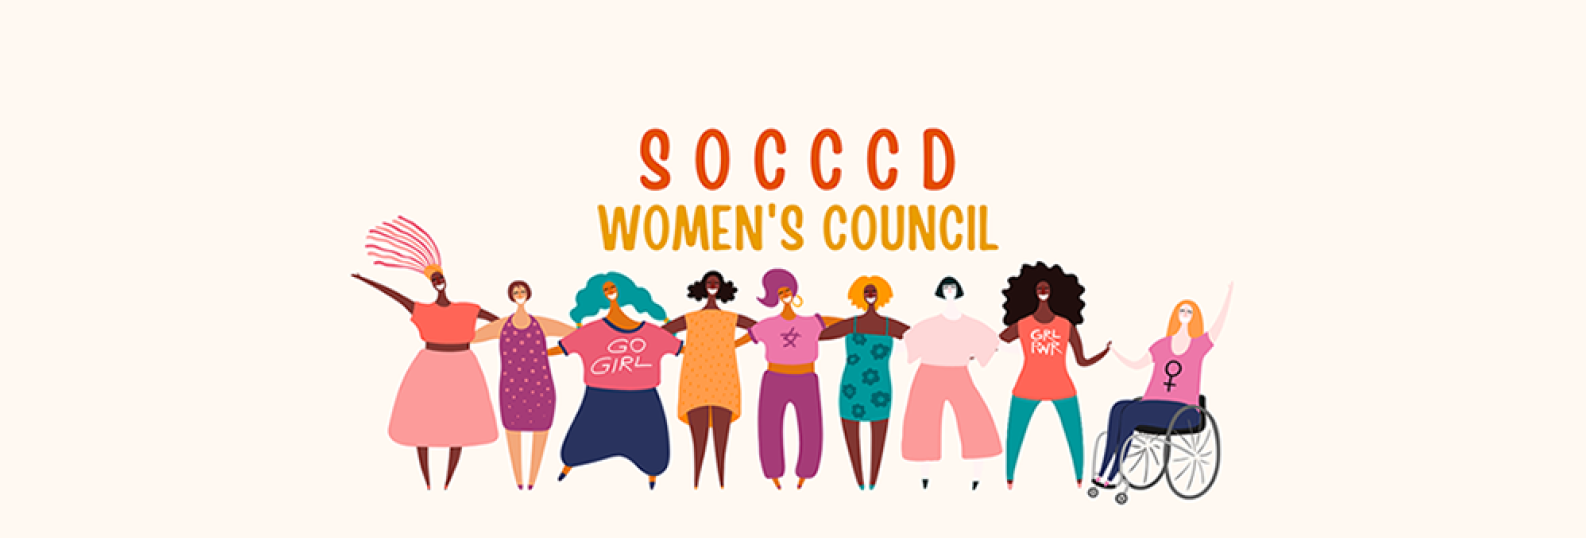 women's council logo 1000p